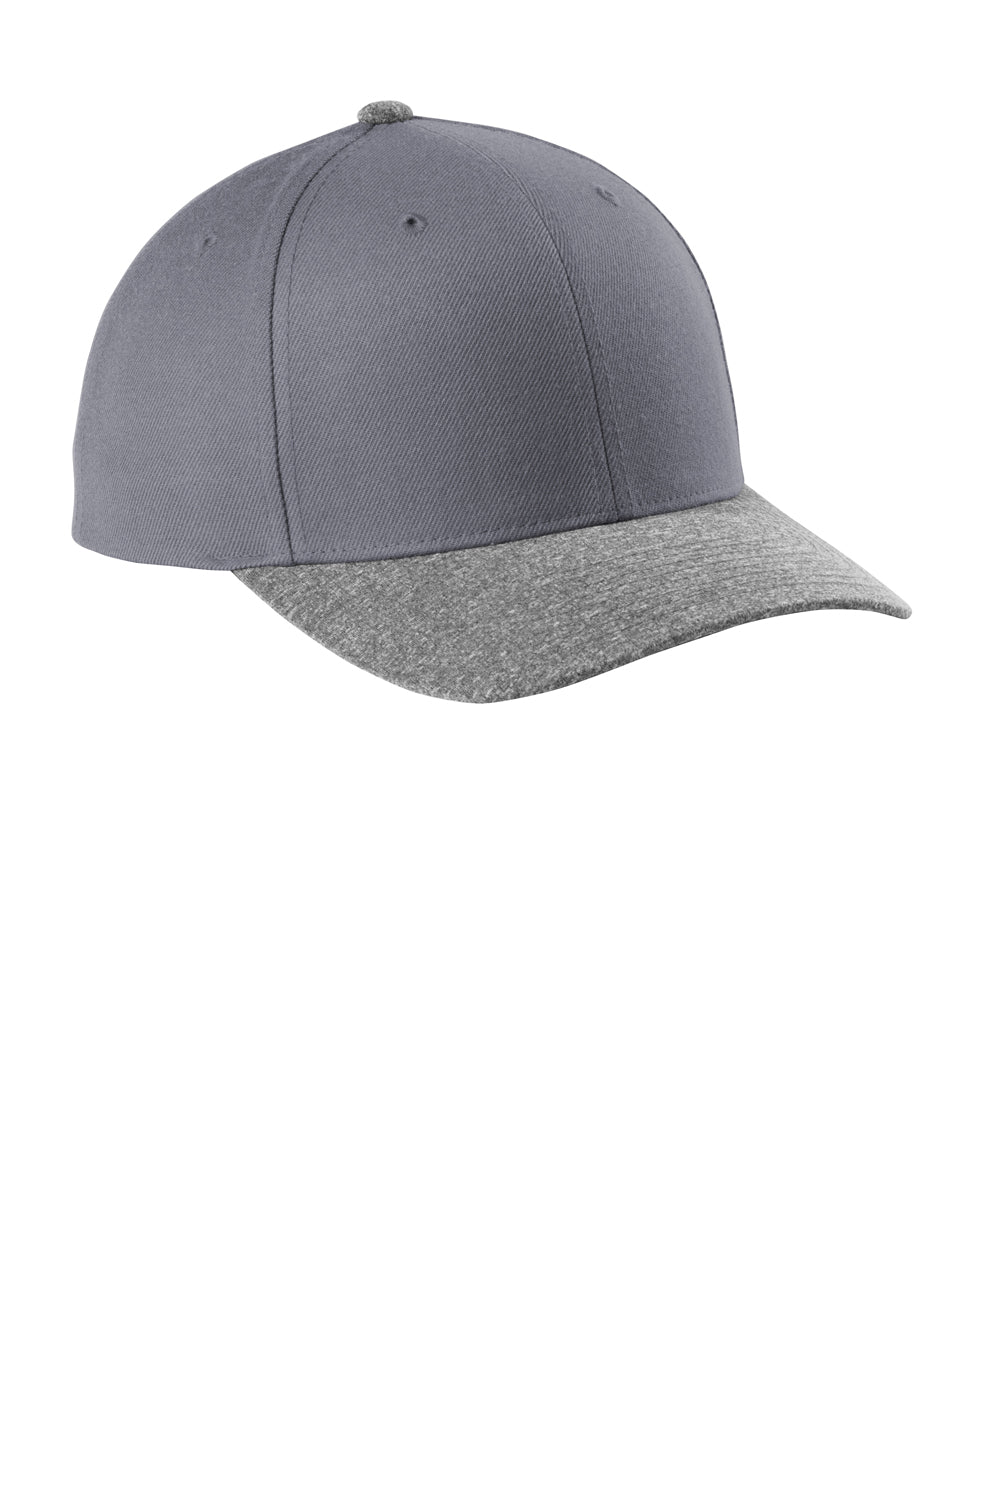 Sport-Tek STC43 Curve Bill Snapback Hat Graphite Grey/Heather Graphite Grey Front